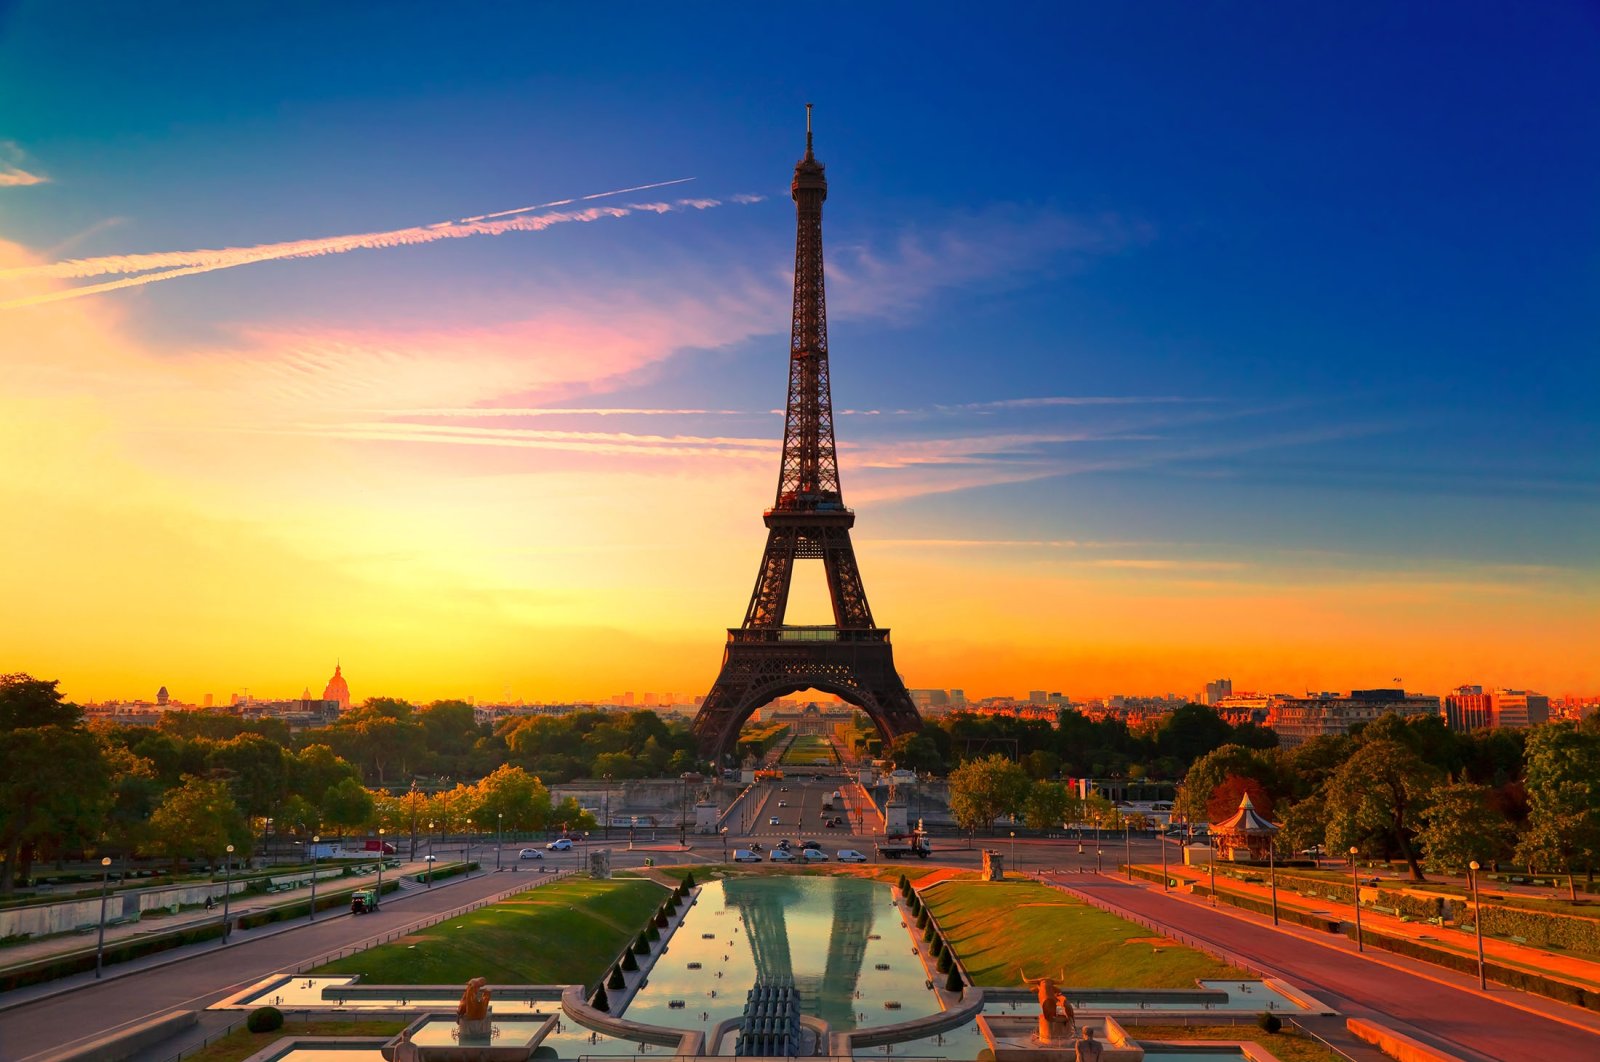 The Eiffel Tower in Paris, France. (Shutterstock Photo)